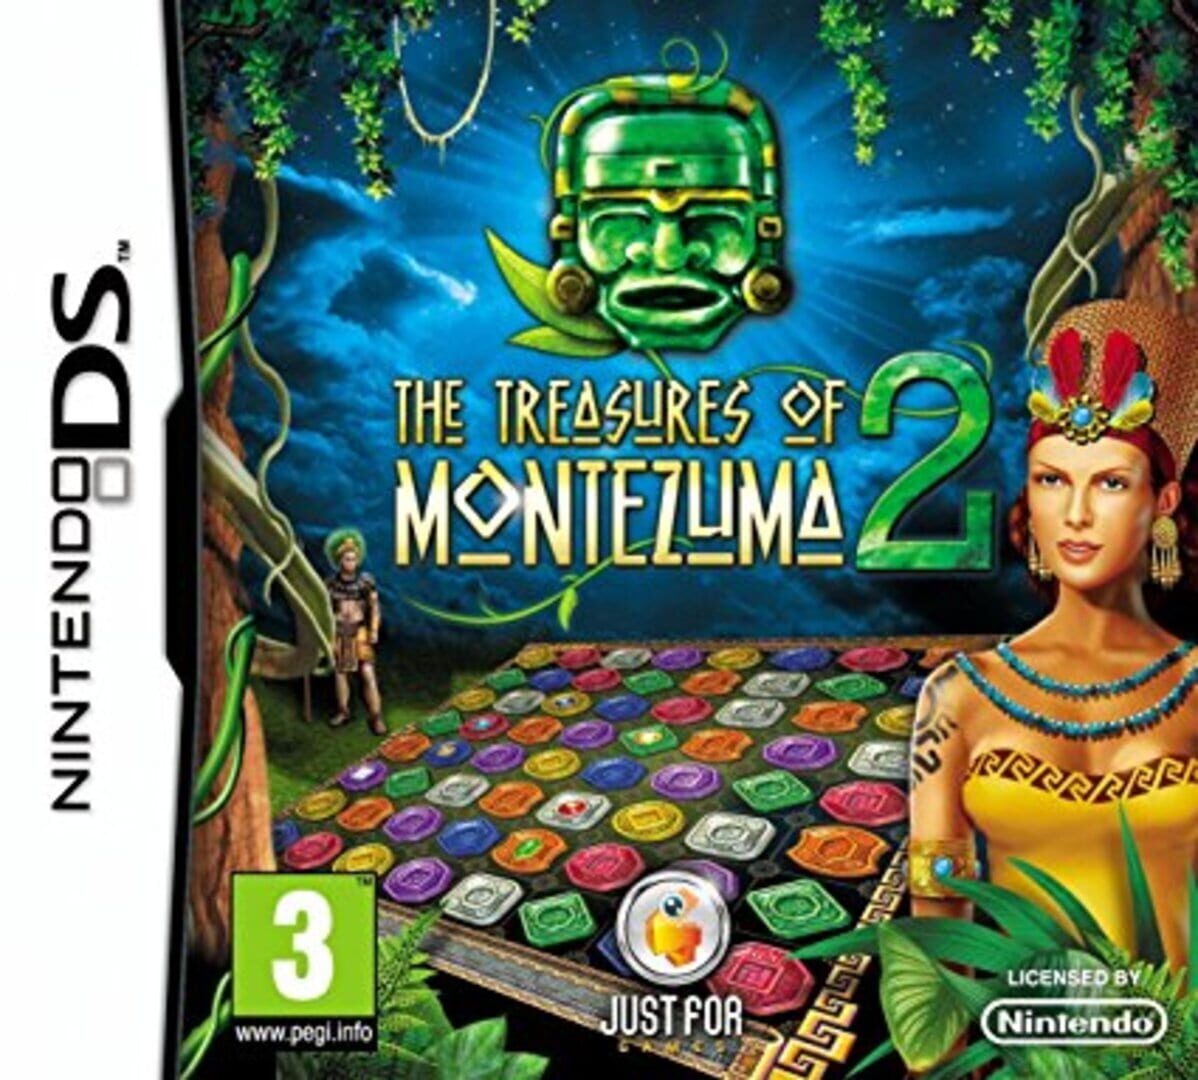 Buy Cheap The Treasures of Montezuma 2 Season Passes Online • CDKeyPrices.c...